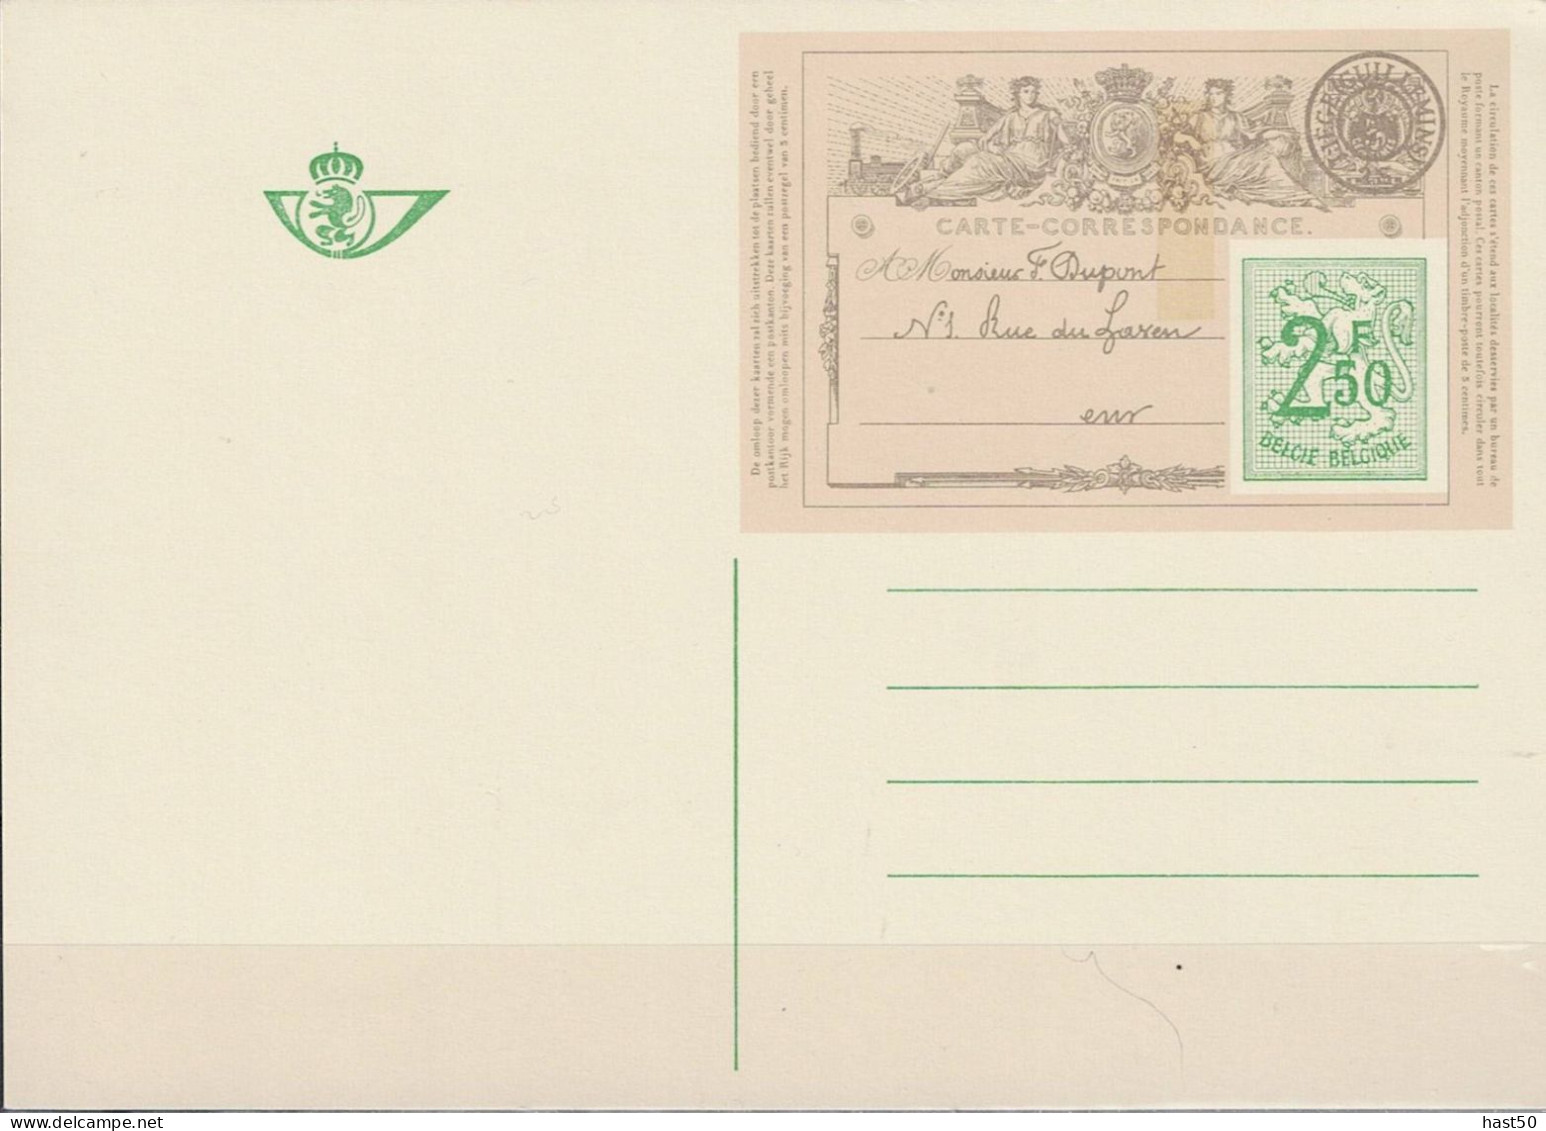 Belgien Belgium Belgique - Postkarte "100  Jahre Postkarte" (MiNr: P348) 1971 - Siehe Scan - Cartes Postales Illustrées (1971-2014) [BK]